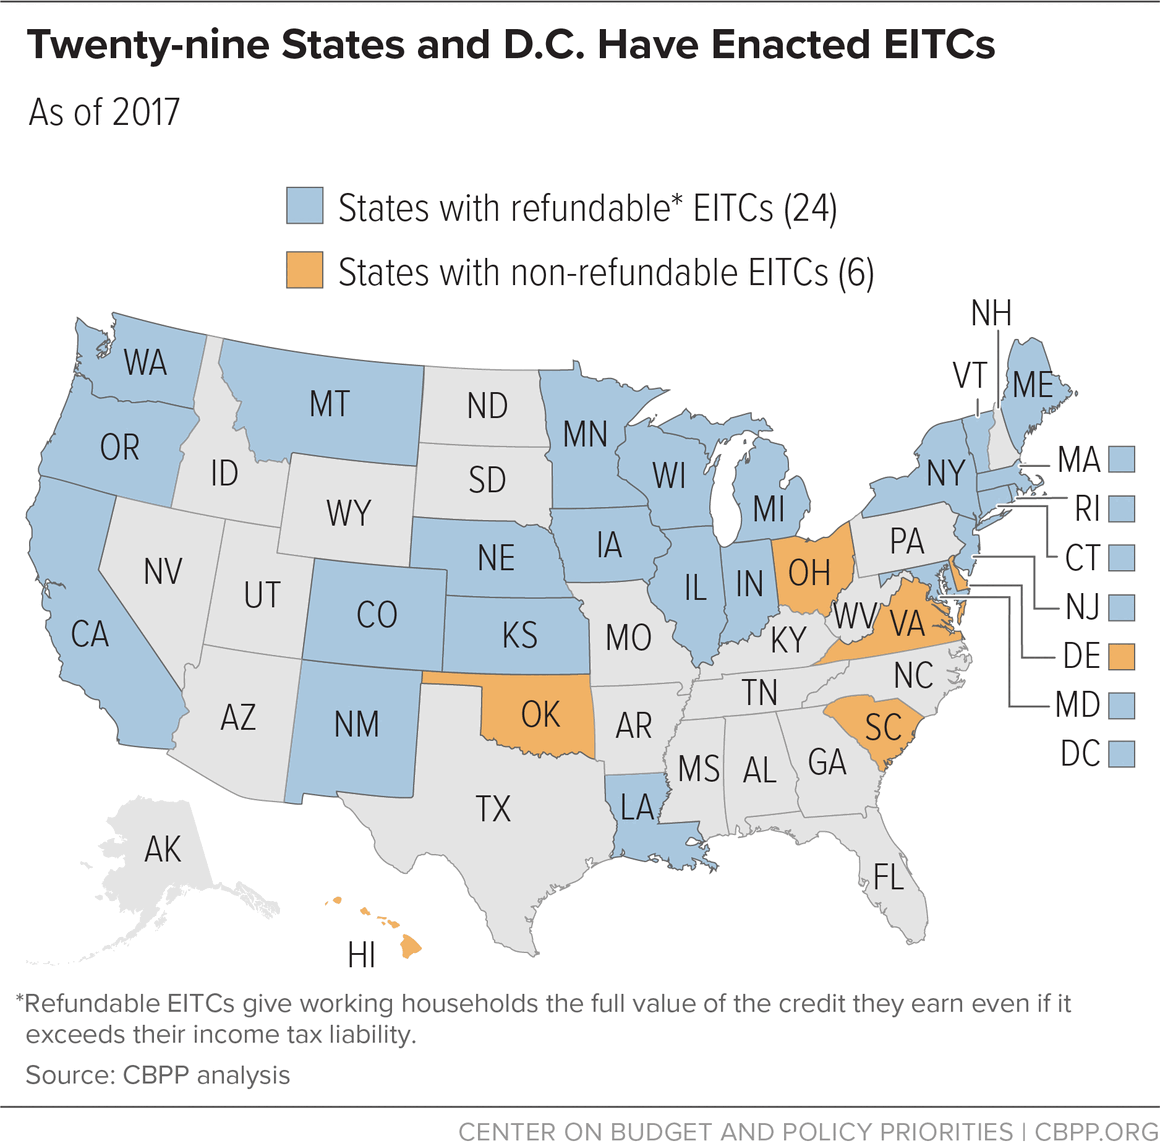 Twenty-nine States and D.C. Have Enacted EITCs, 2017